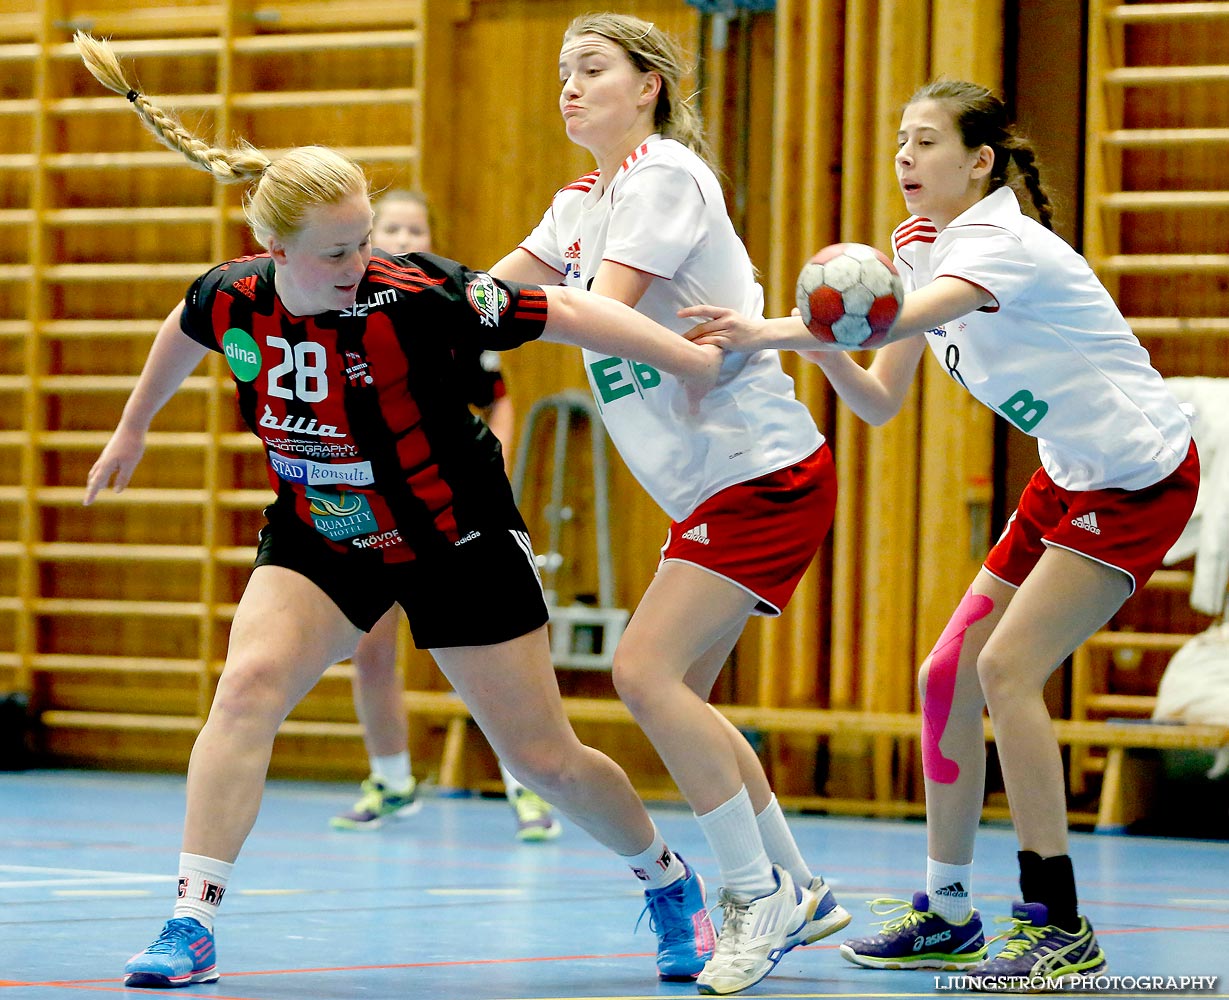 HK Country-Falköpings AIK HK 16-29,dam,Stöpenhallen,Stöpen,Sverige,Handboll,,2014,100151